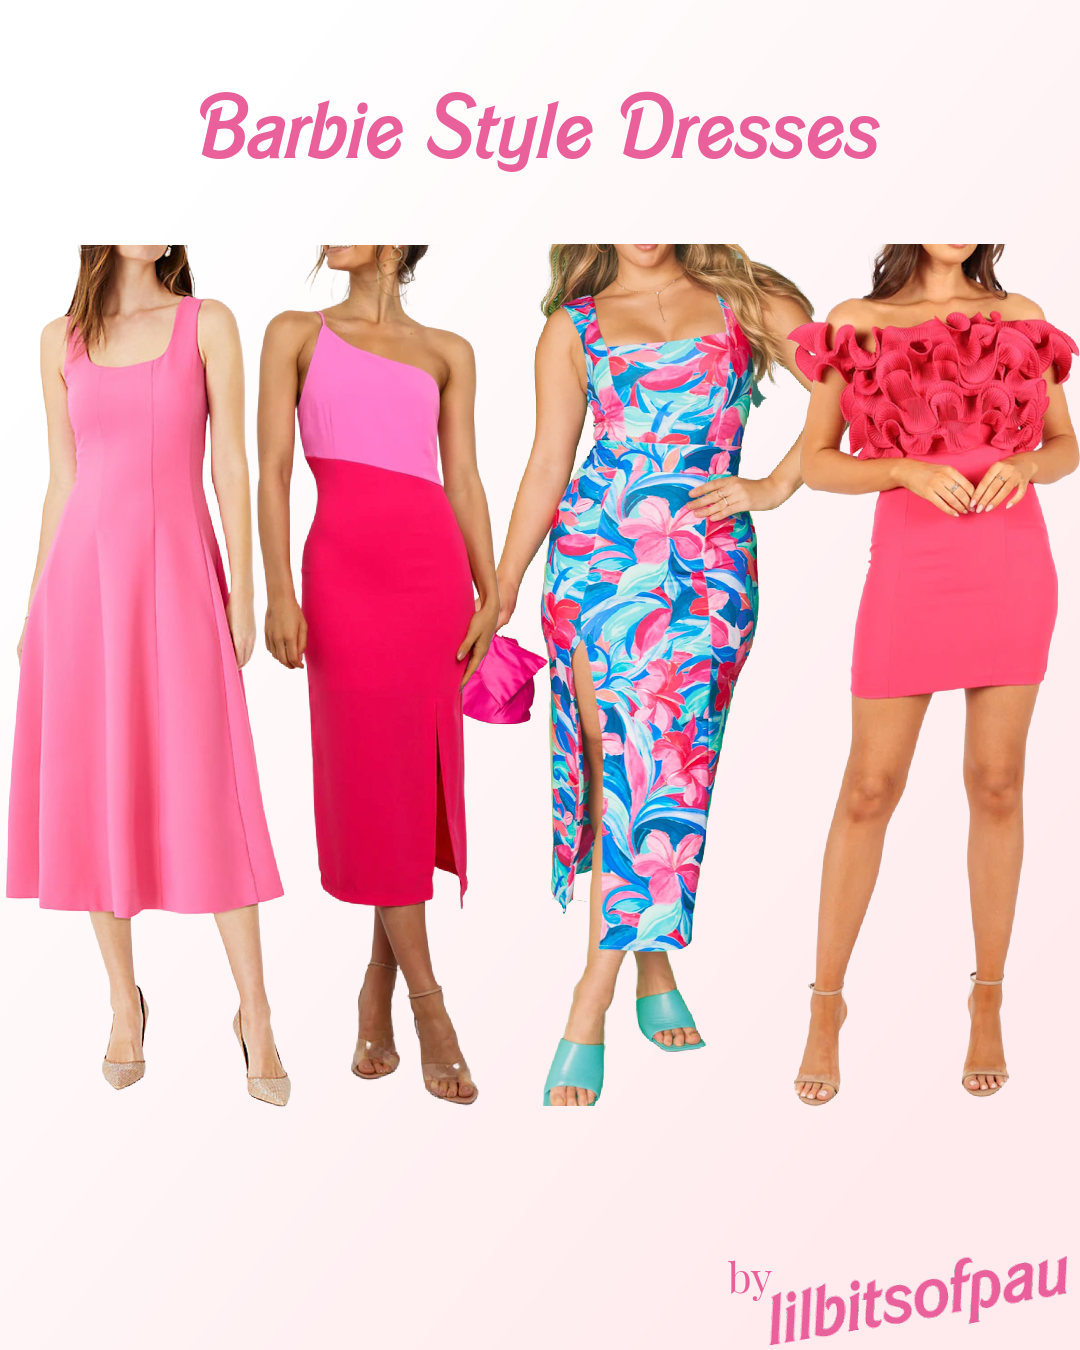 Barbie Outfit Ideas for Women, Barbiecore